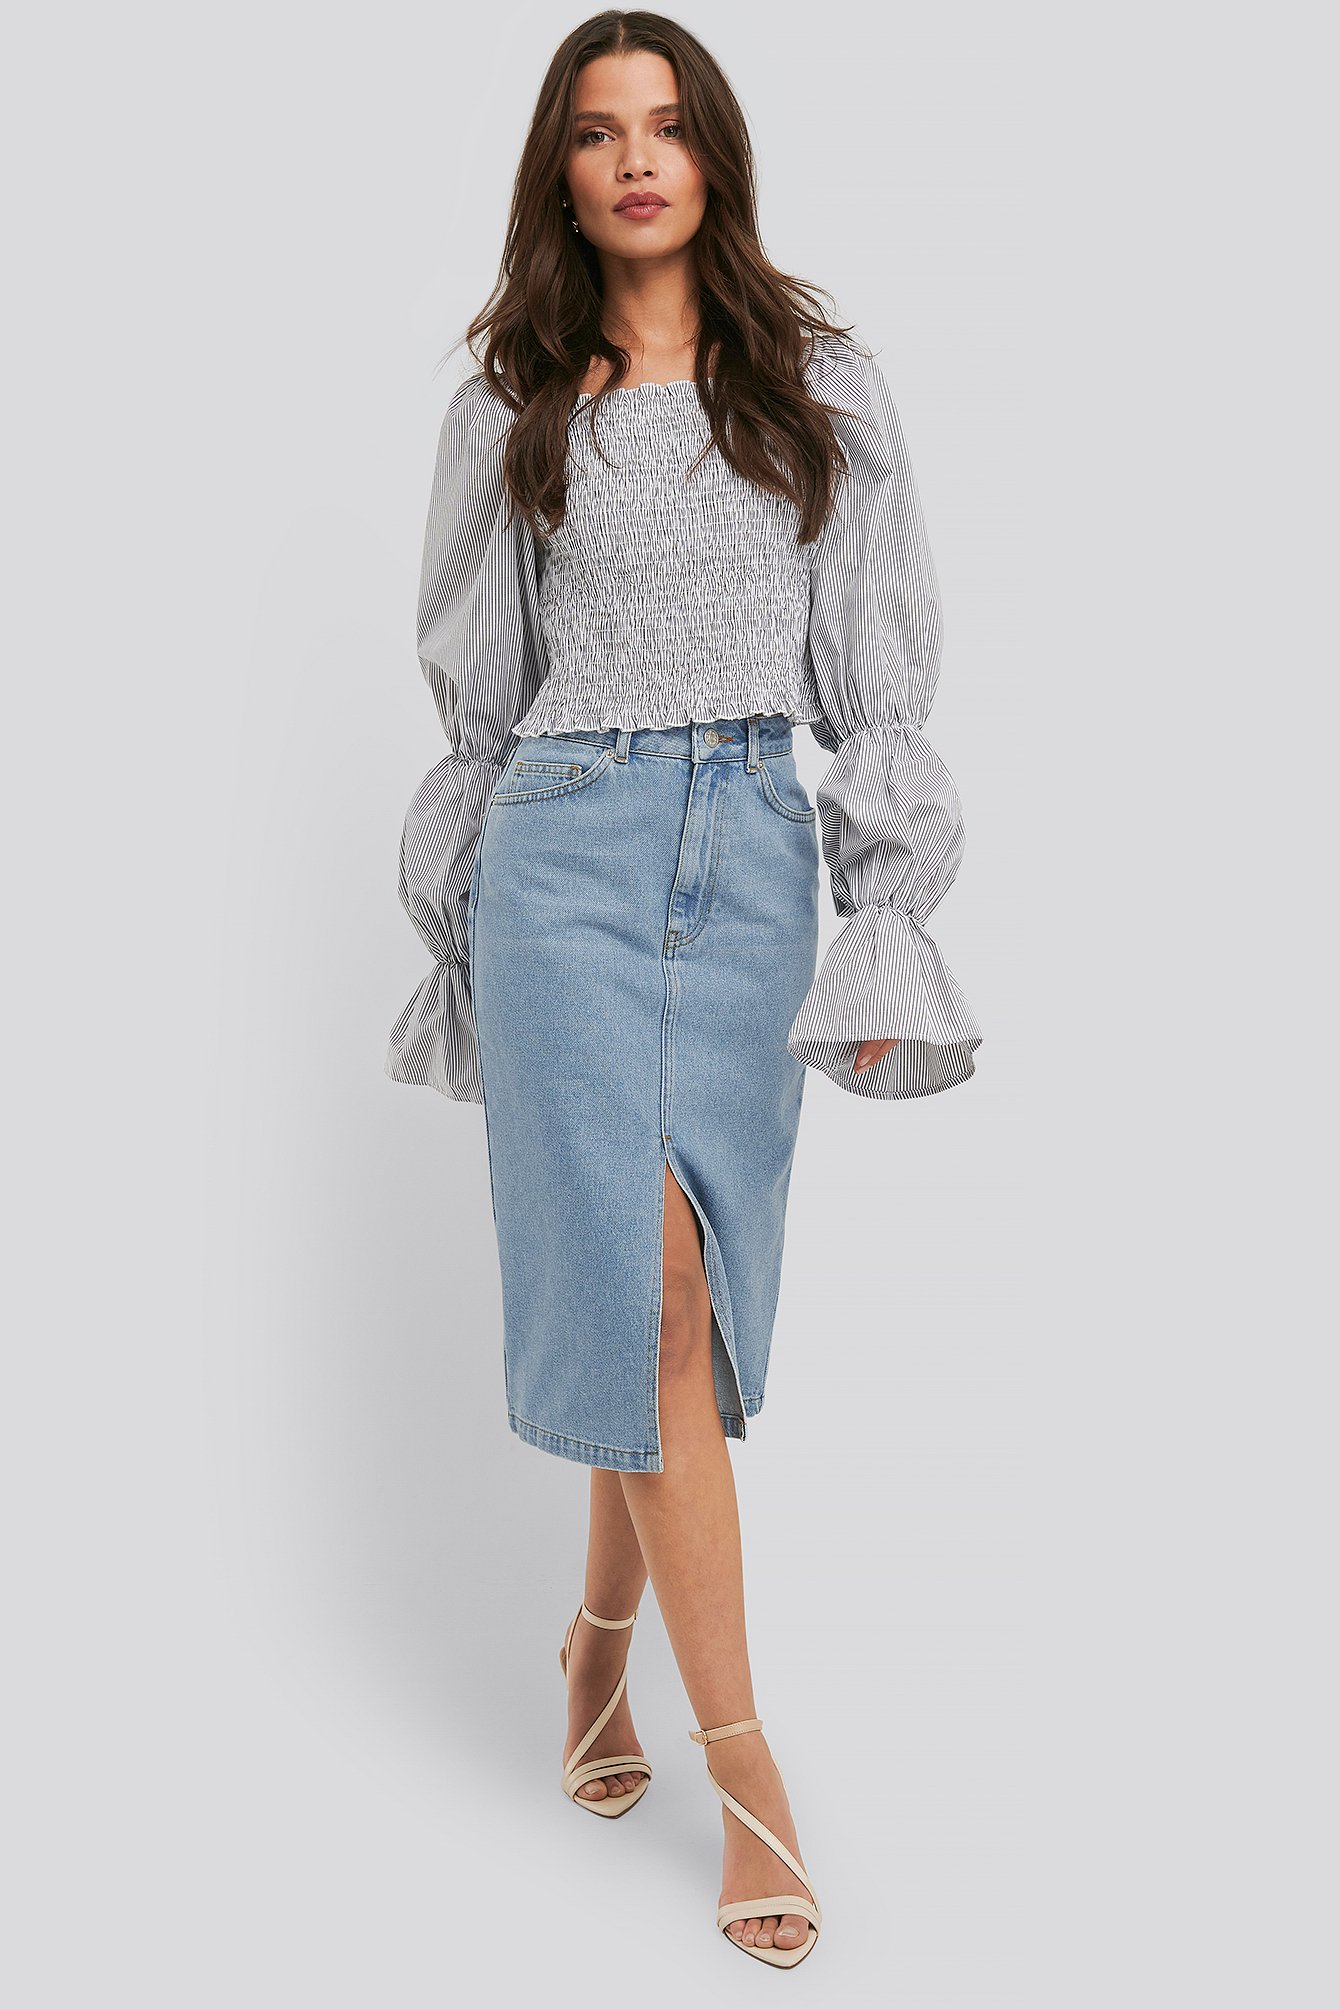 midi blue jean skirt